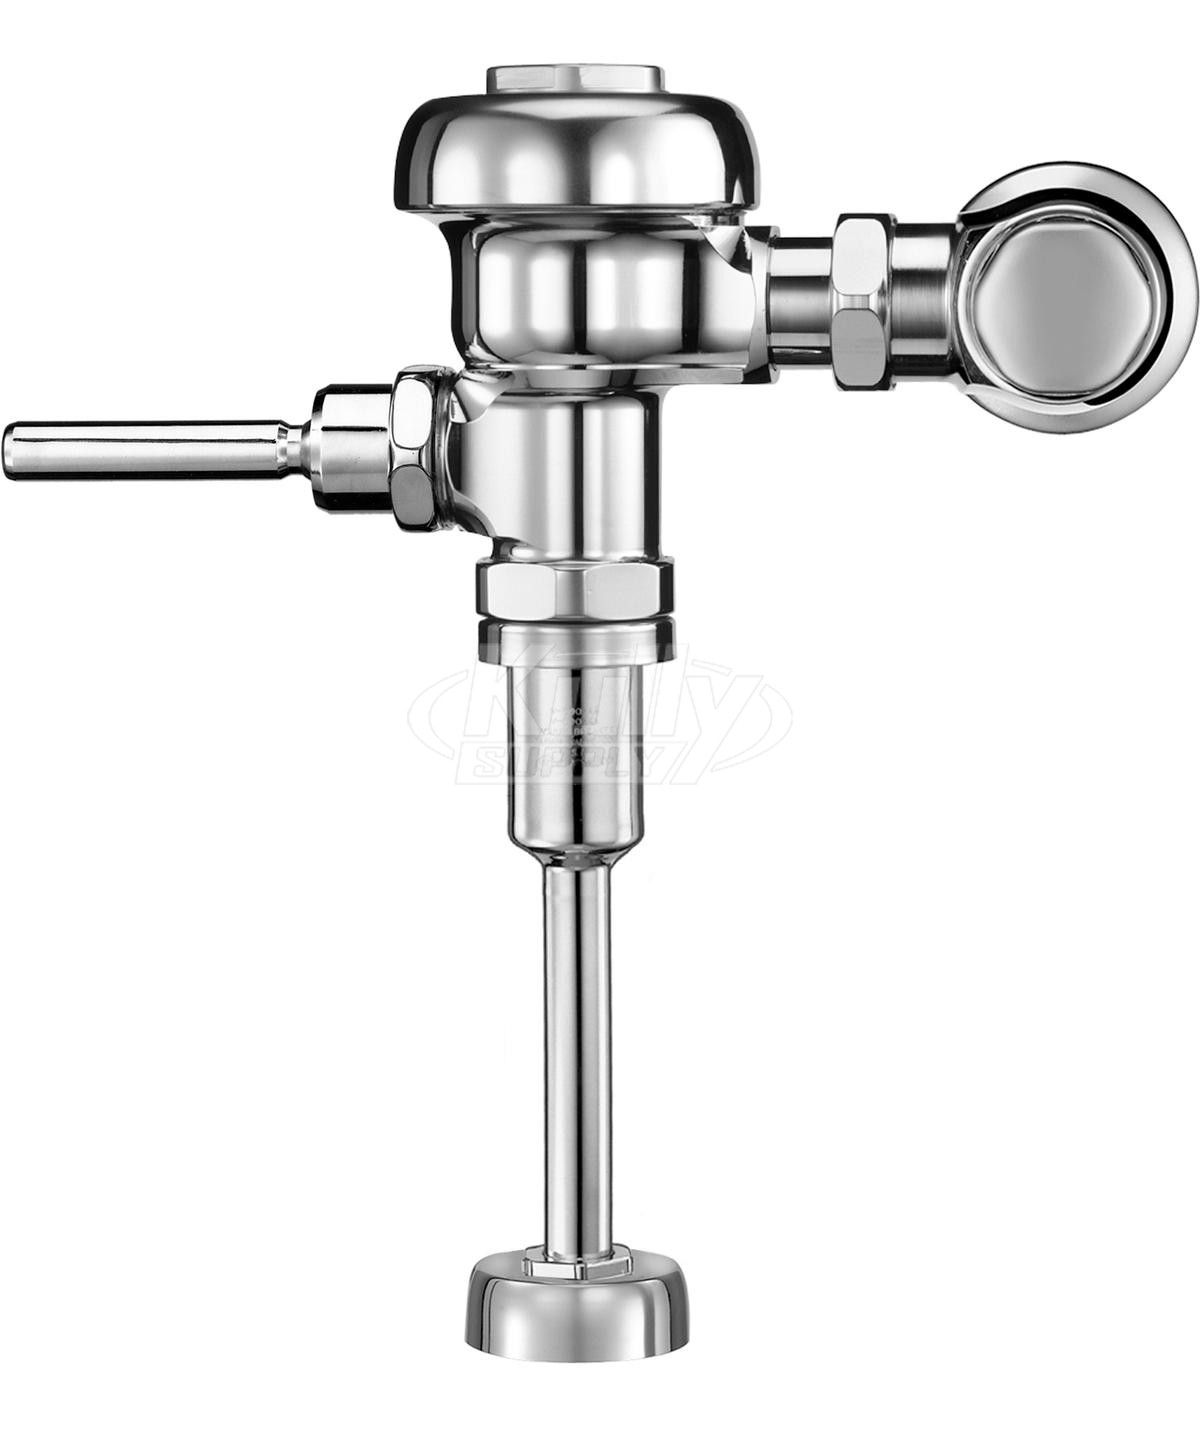 Sloan 186-1 DFB Urinal 1.0 GPF Flushometer